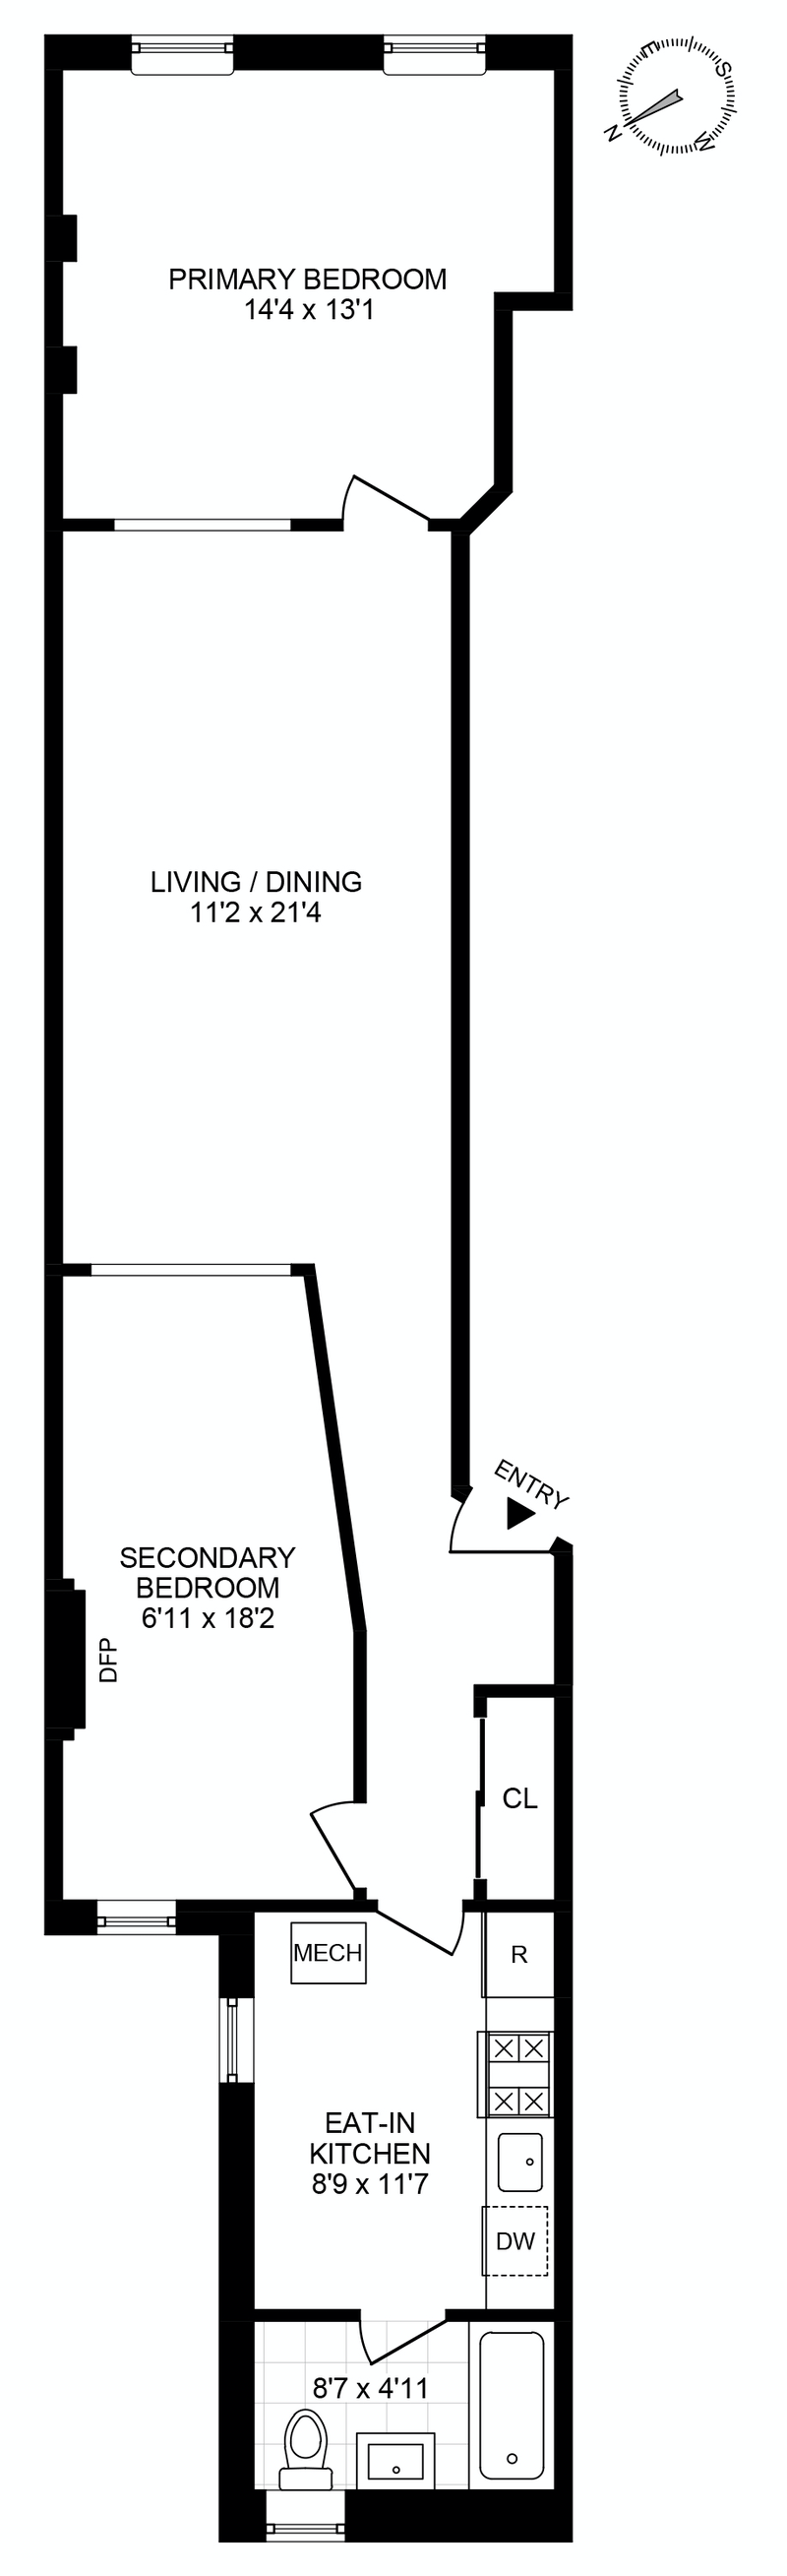 Floorplan for 160 Seventh Avenue, 1R